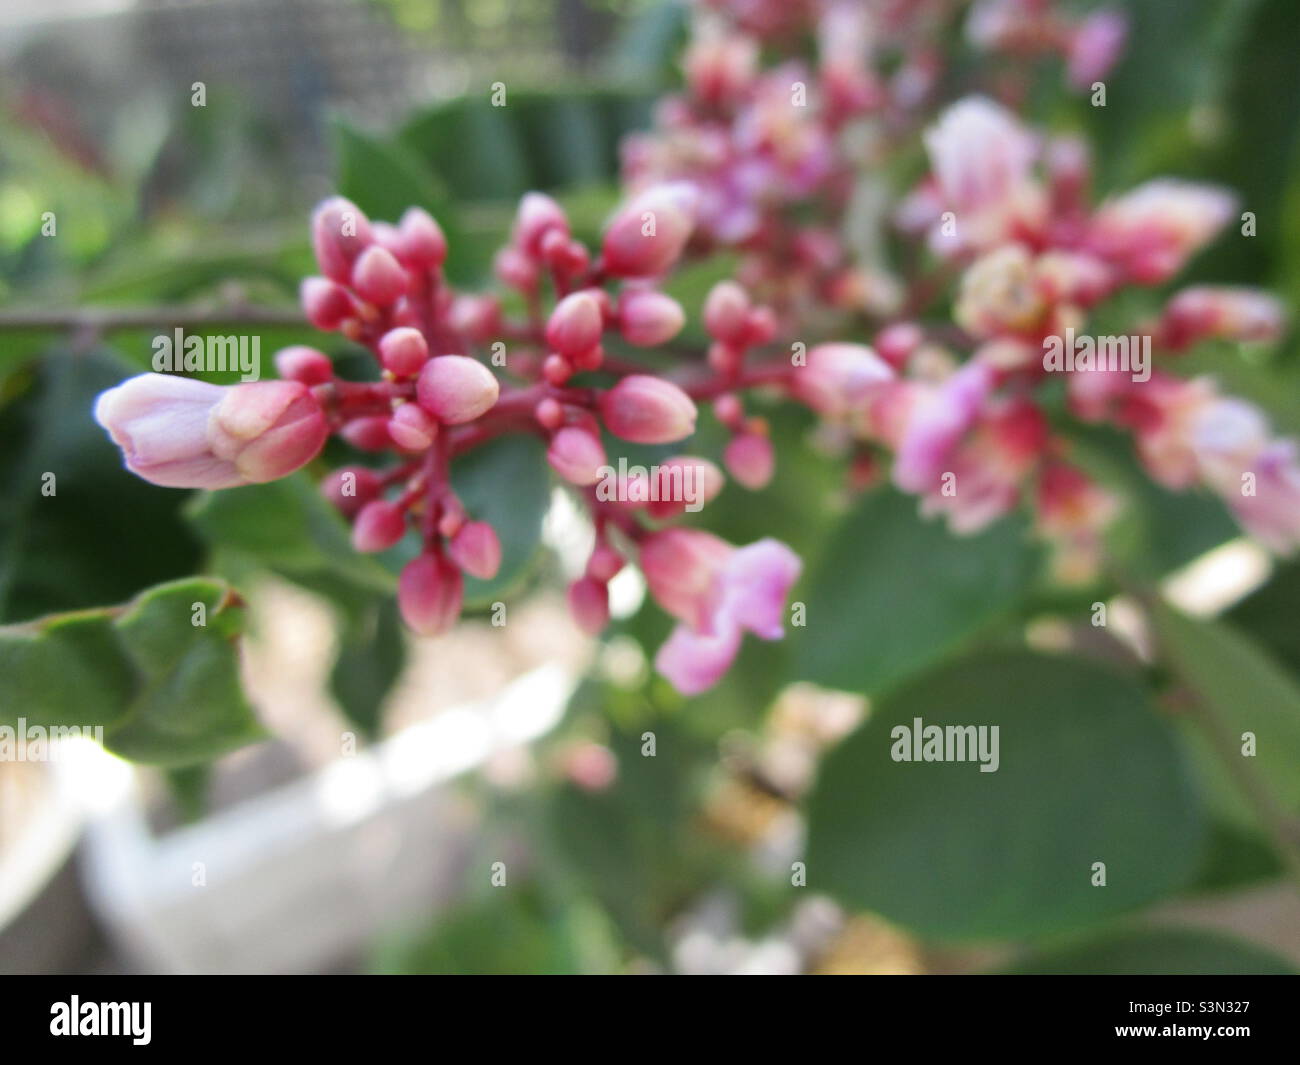 Fruit red guava tree -Fotos und -Bildmaterial in hoher Auflösung – Alamy